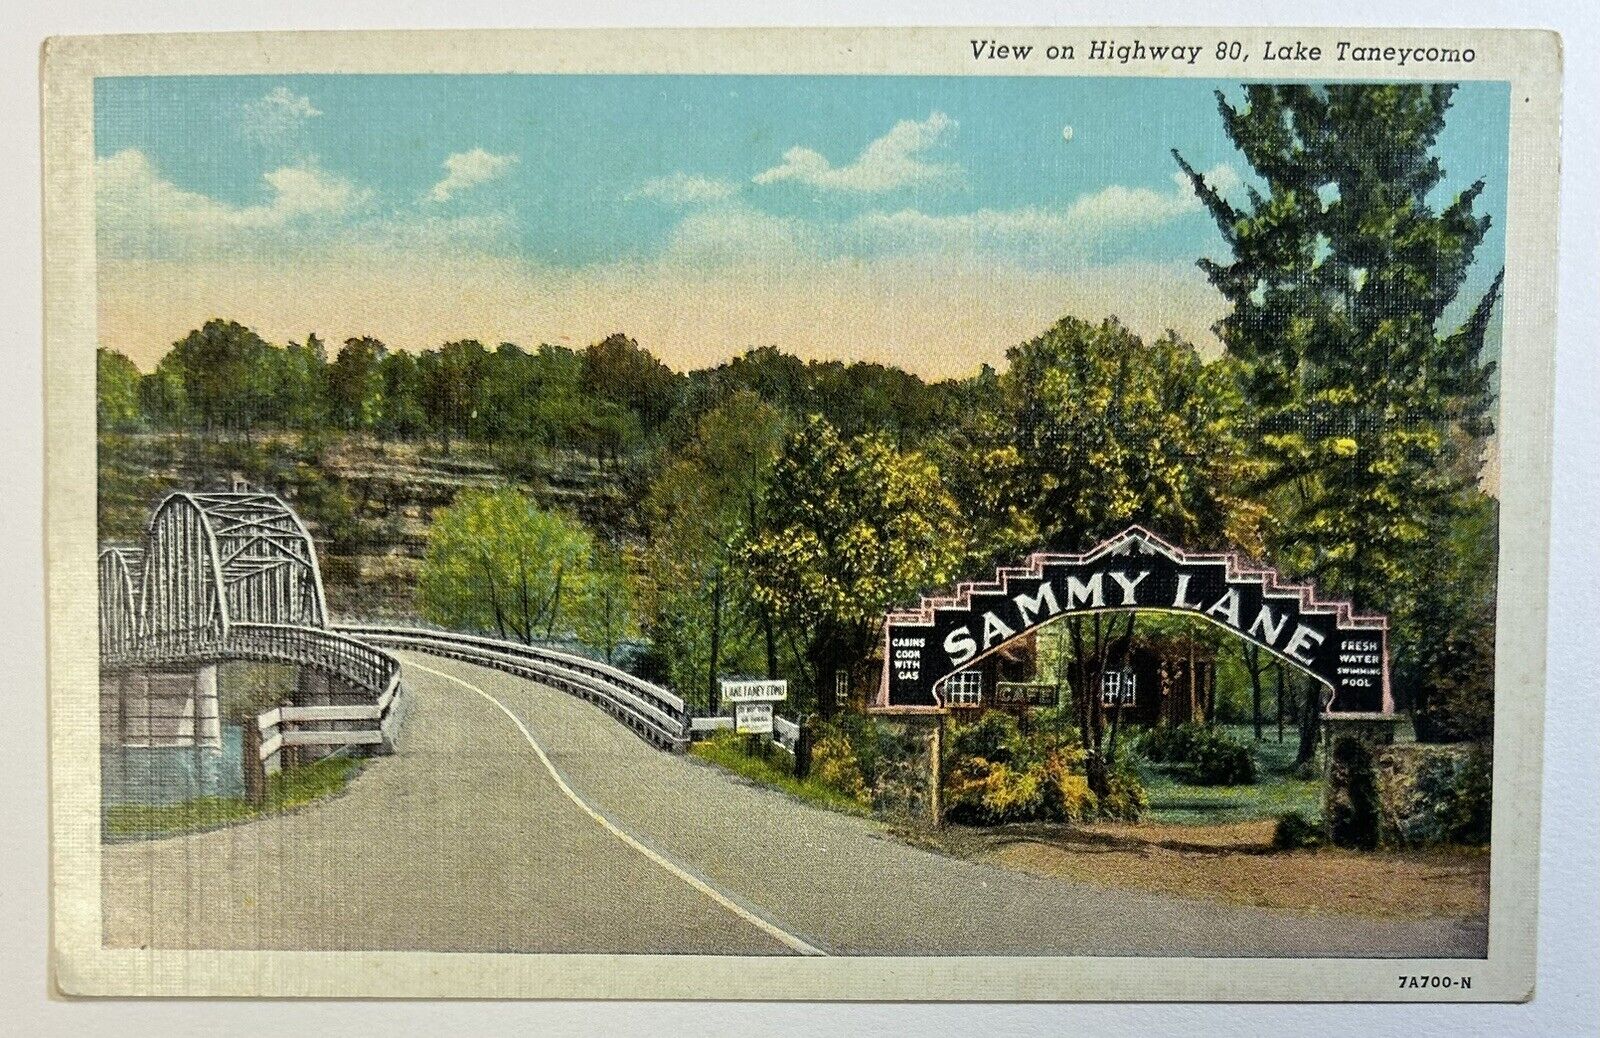 View on Highway 80 Lake Taneycomo, Missouri Linen Postcard, Sammy Lane